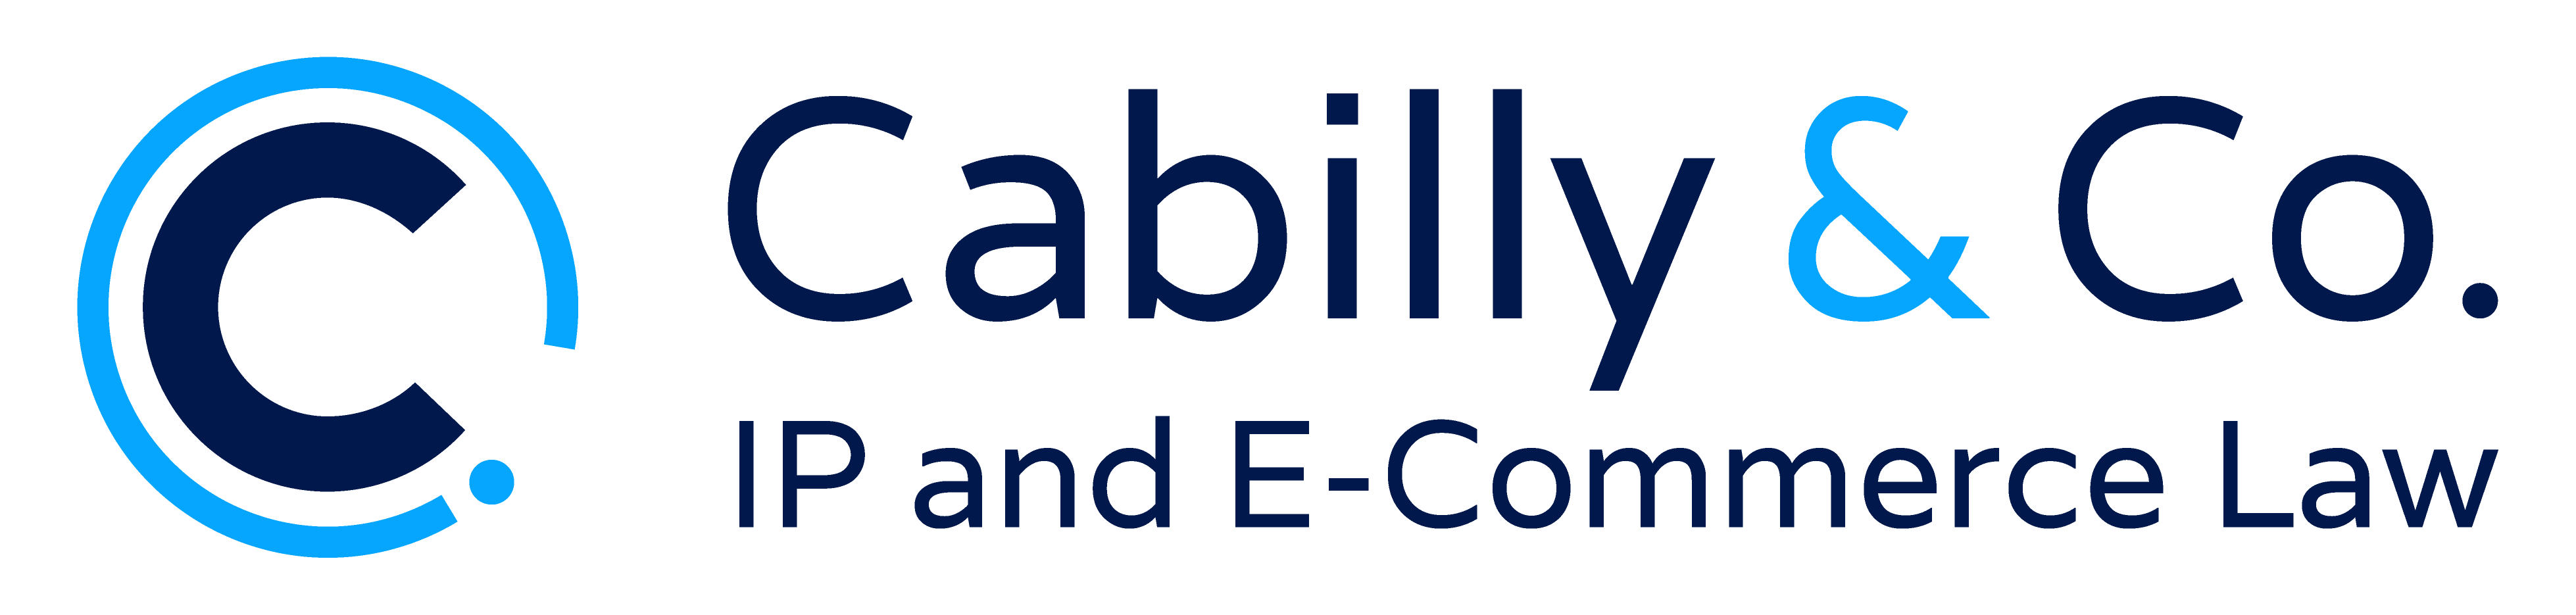 Cabilly-logo-full